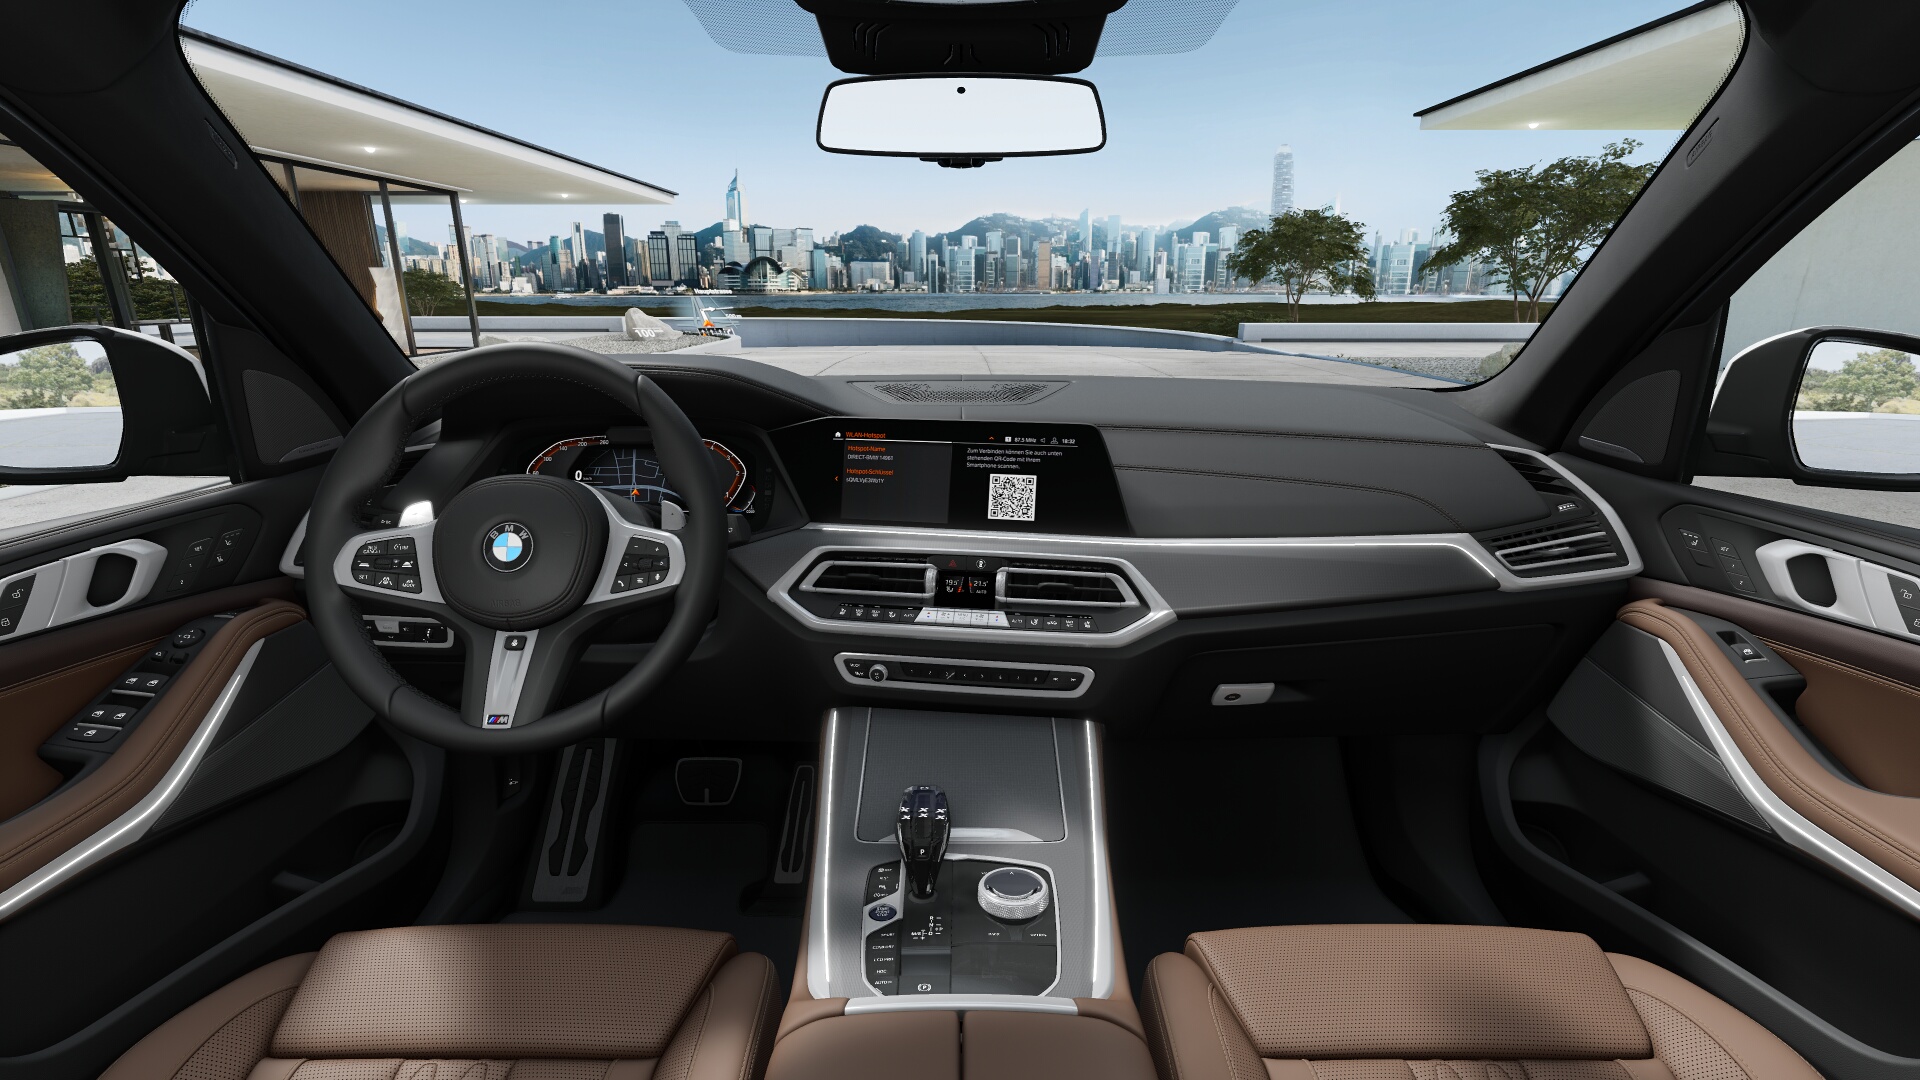 BMW X5 30d xDrive M-paket | nové auto skladem | prodej online | nákuponline | super cena | autoibuy.com